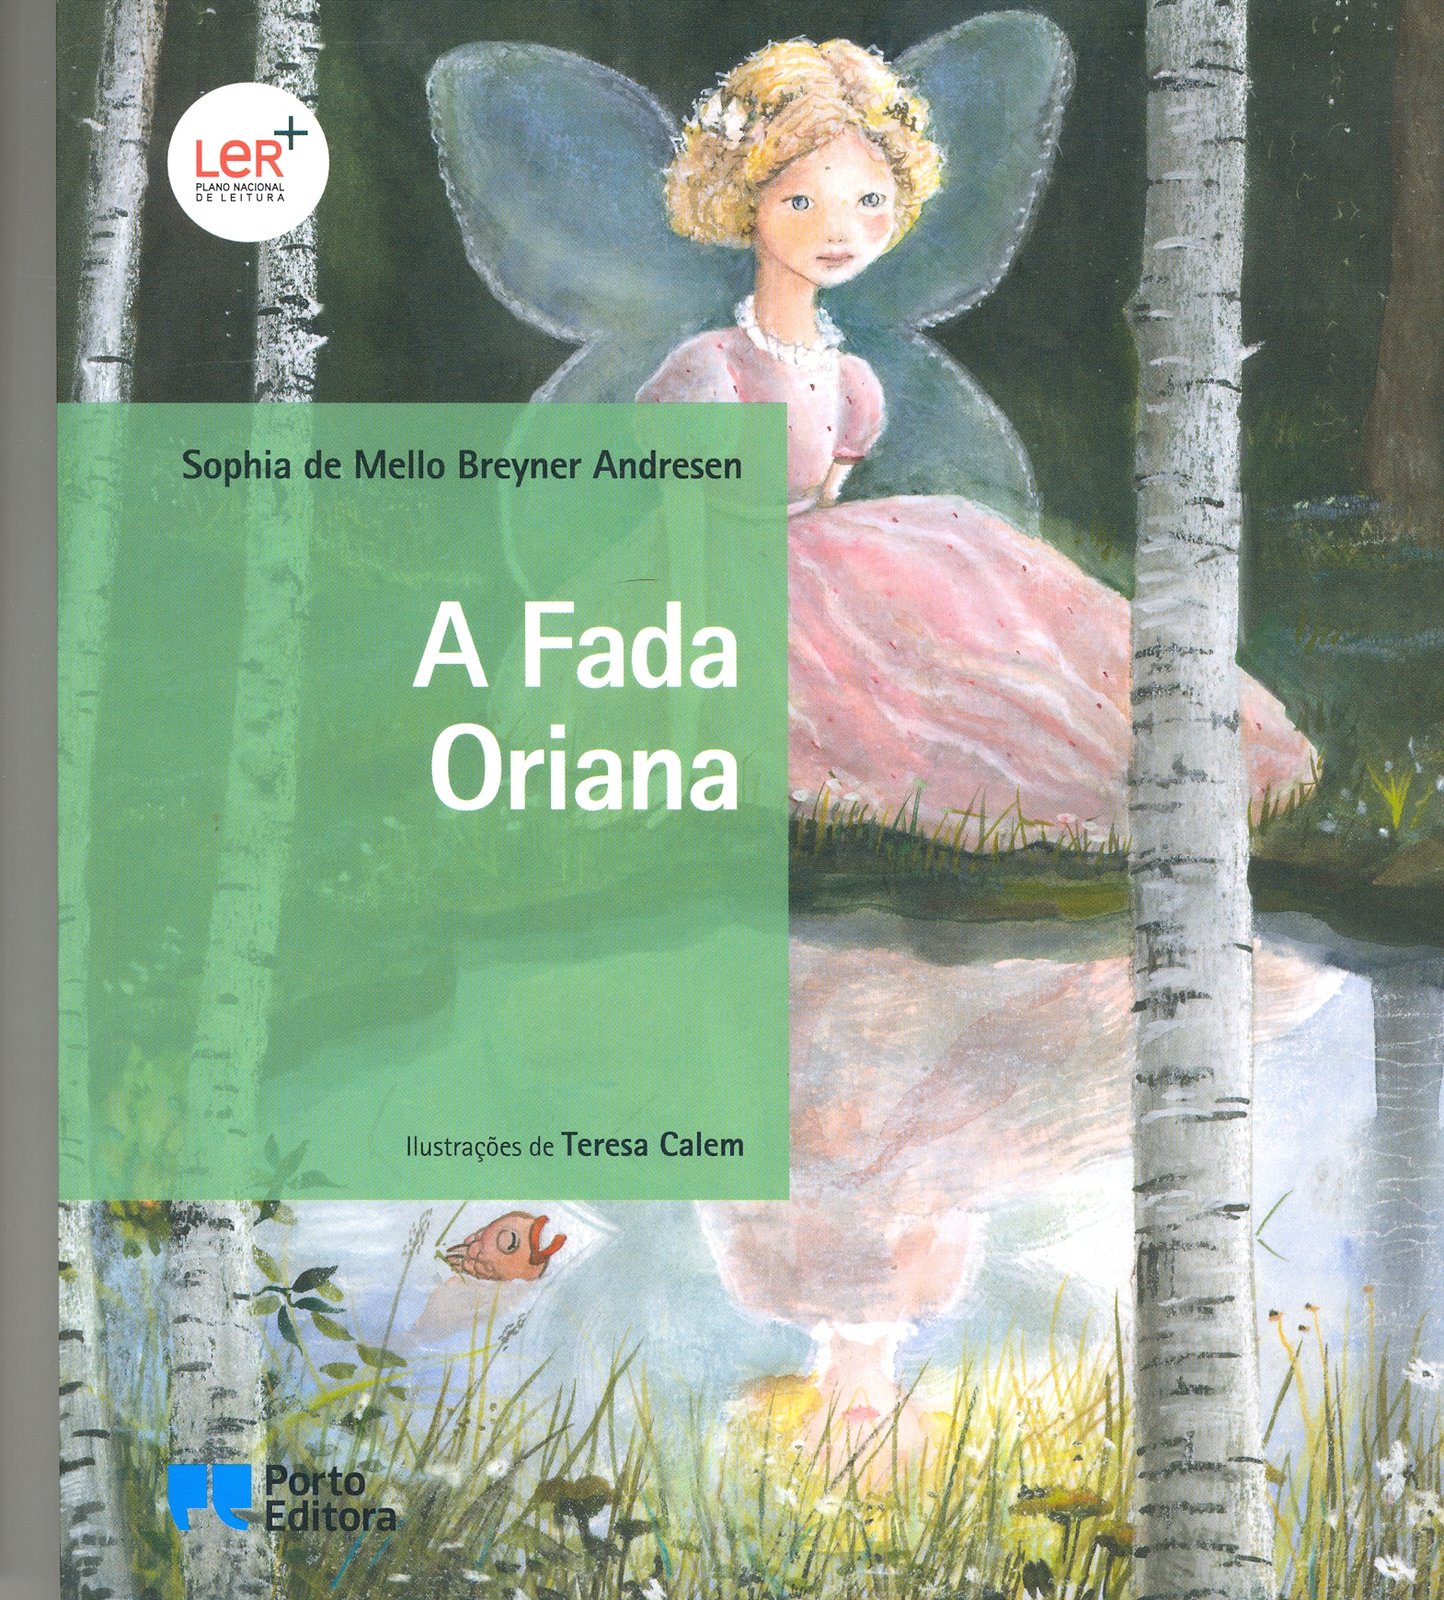 Sophia de Mello Breyner Andersen - A Fada Oriana